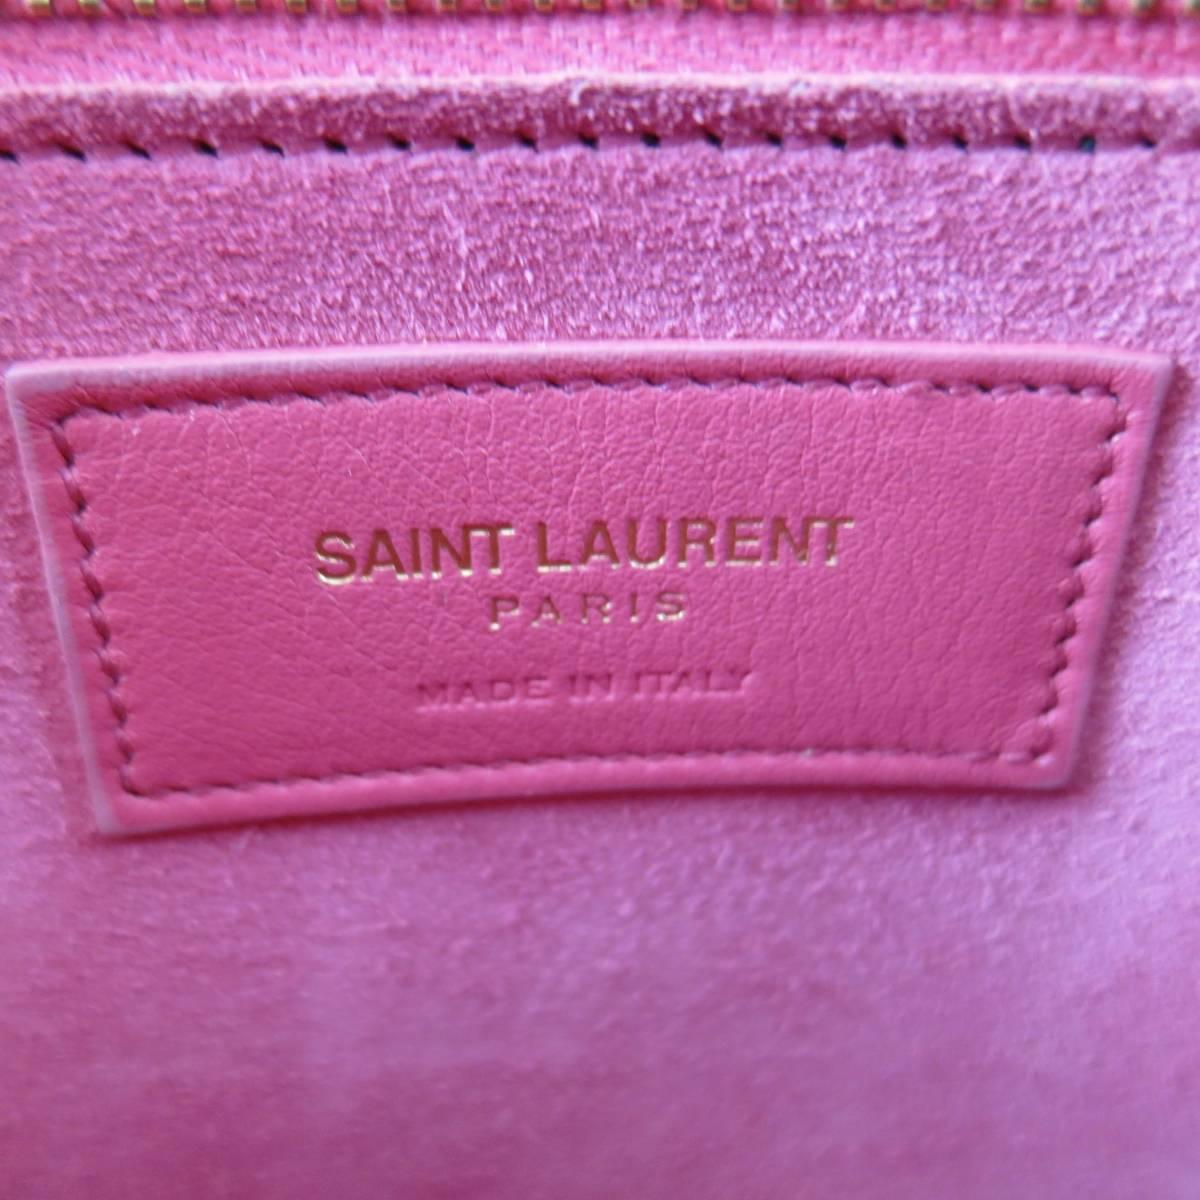 Saint Laurent Handbag - Pink Leather Small Sac Du Jour Bag Bag 5